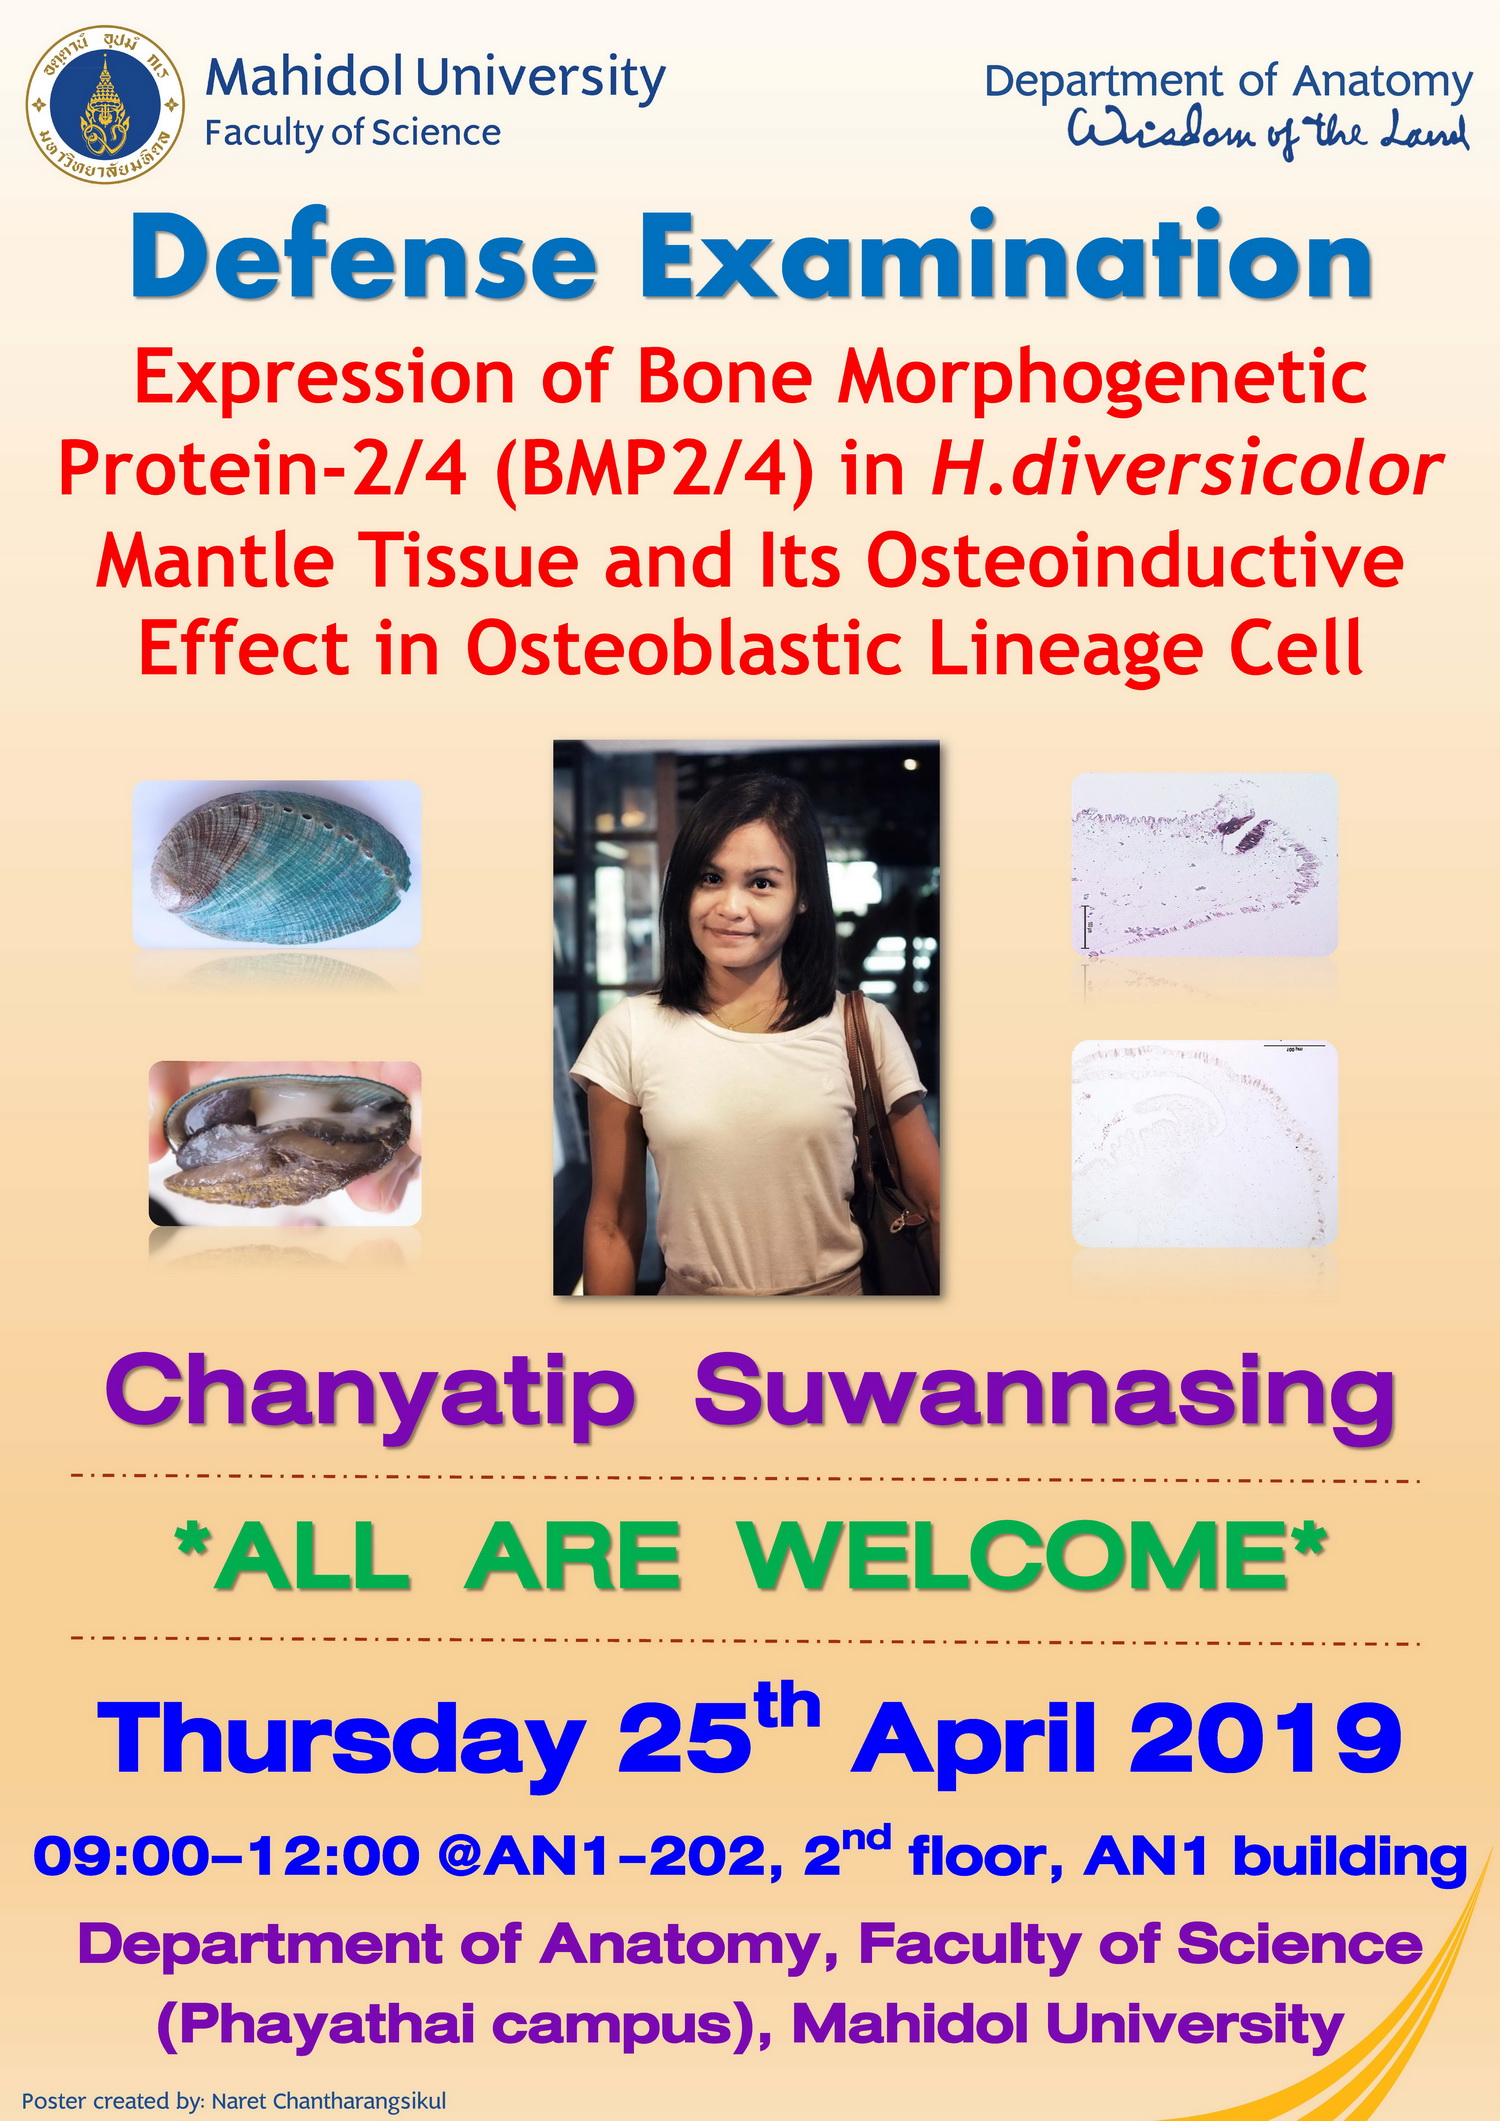 Chanyatip's DEFENSE on Thursday 25th April 2019, 09:00-12:00, @AN1-202